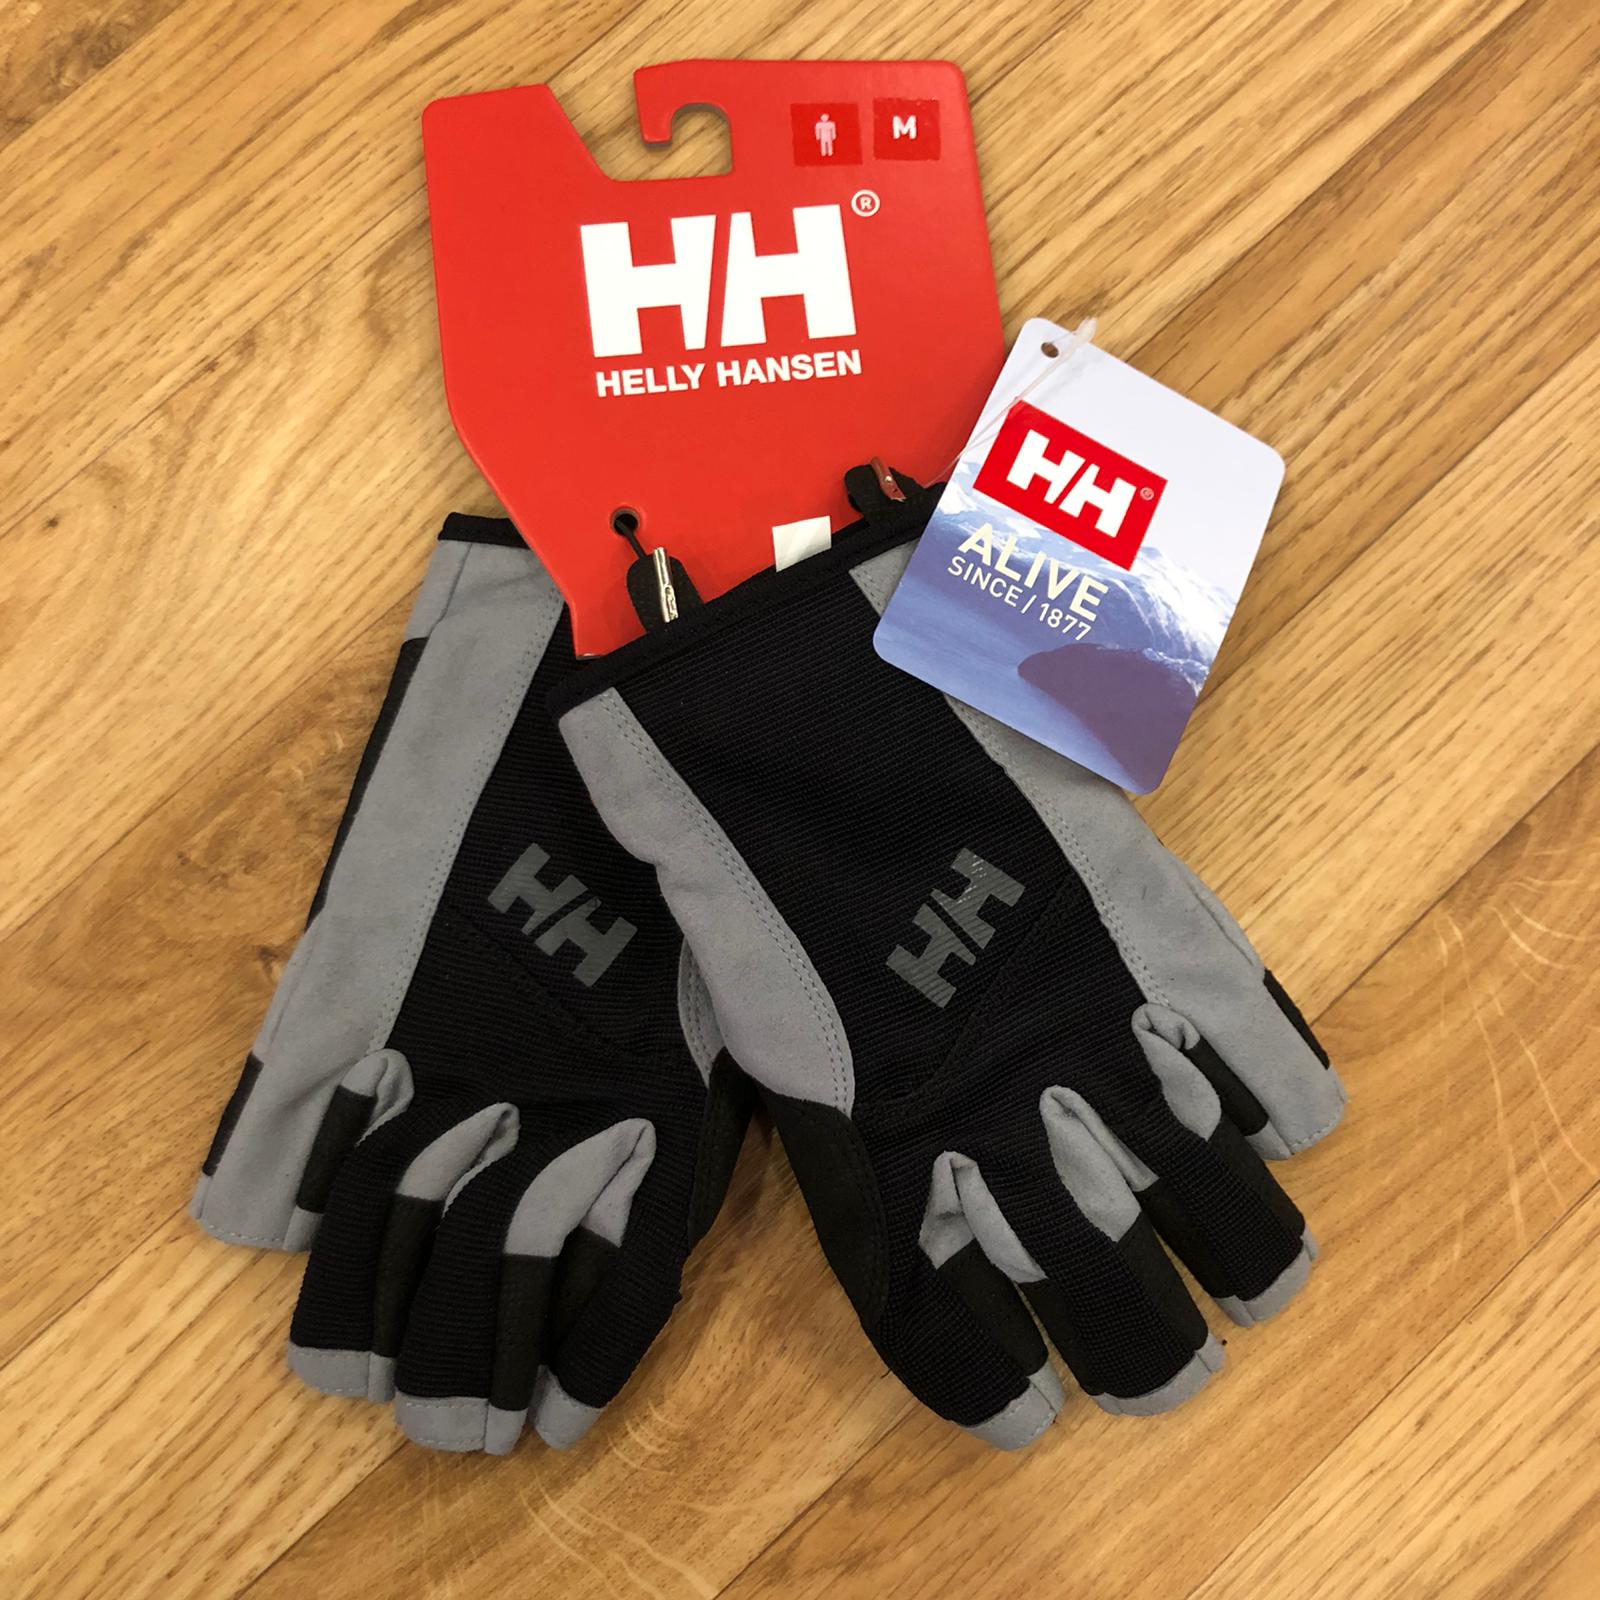 Helly Hansen Sailing Glove (short finger Leather) €33.00